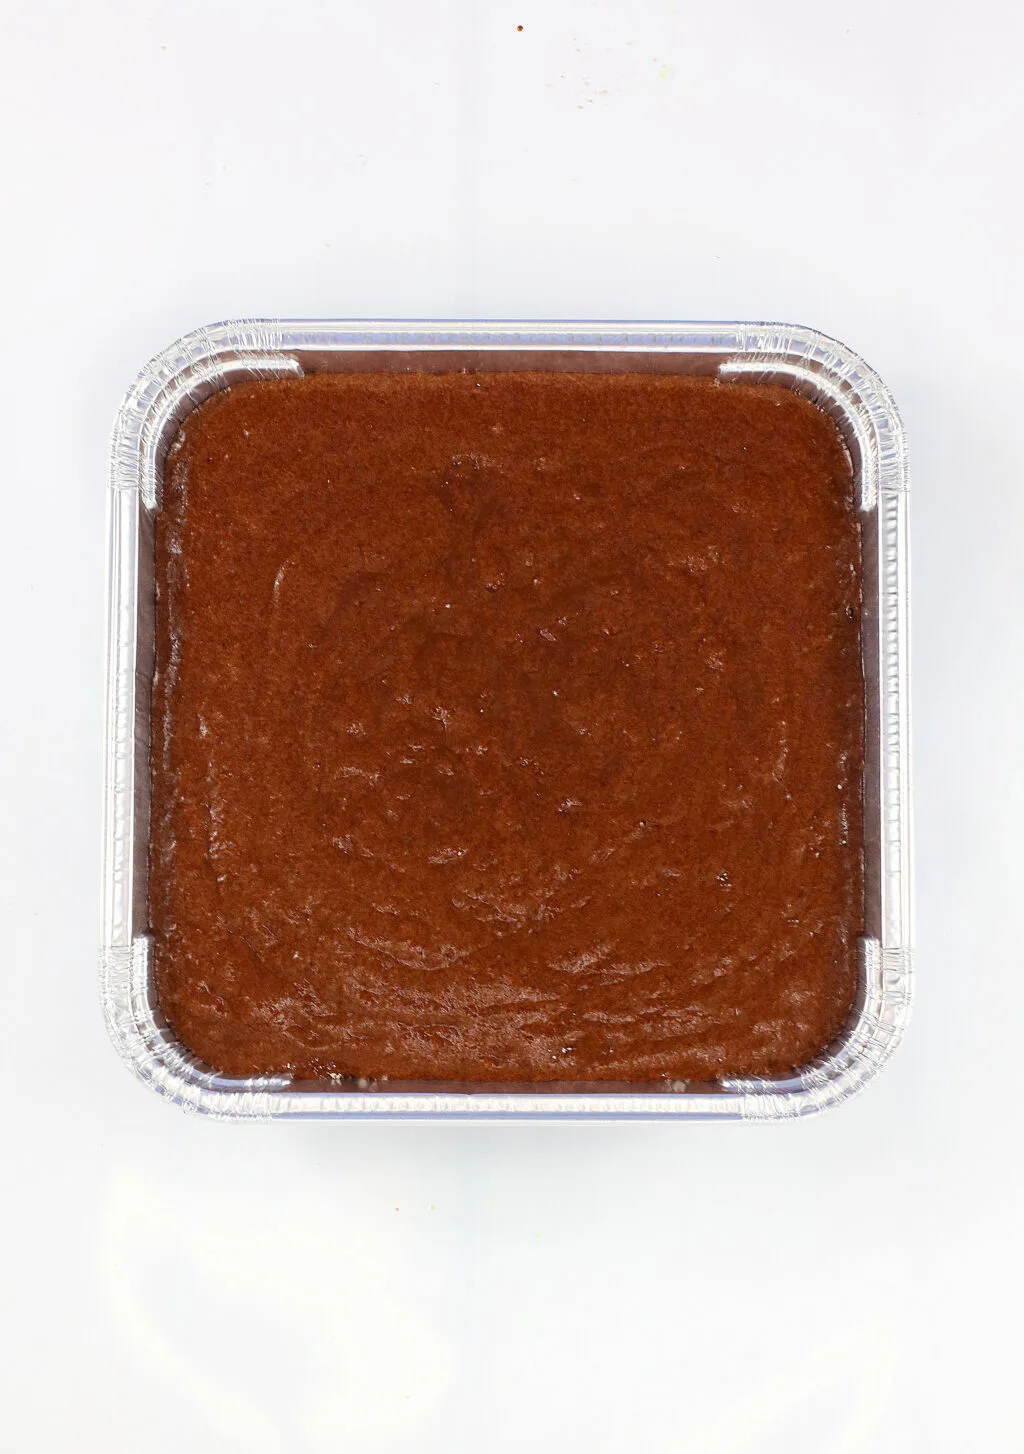 baked dr. pepper cake in cake pan